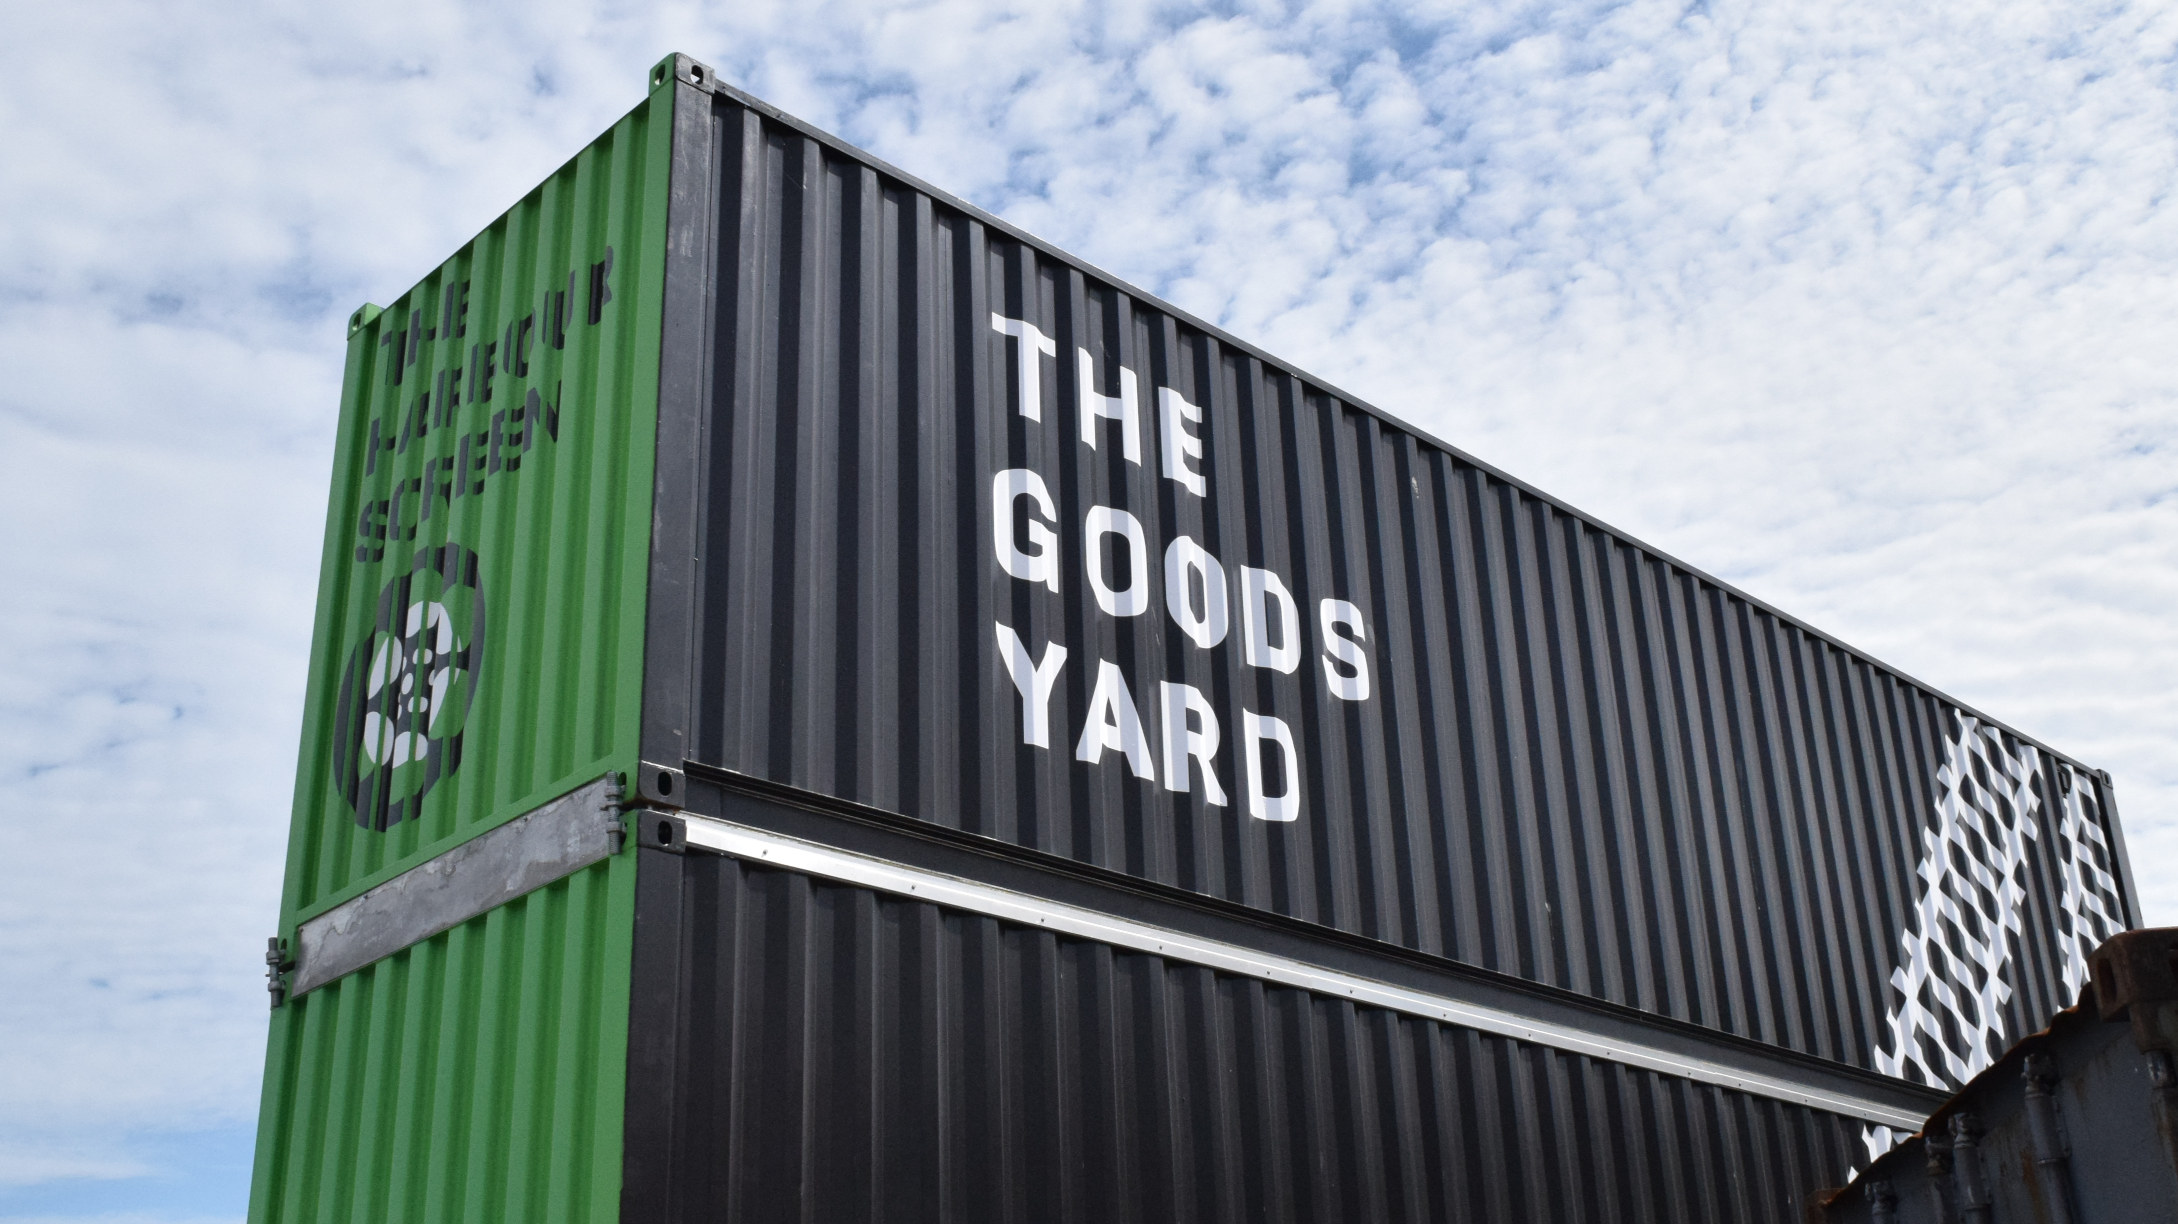 The Goods Yard